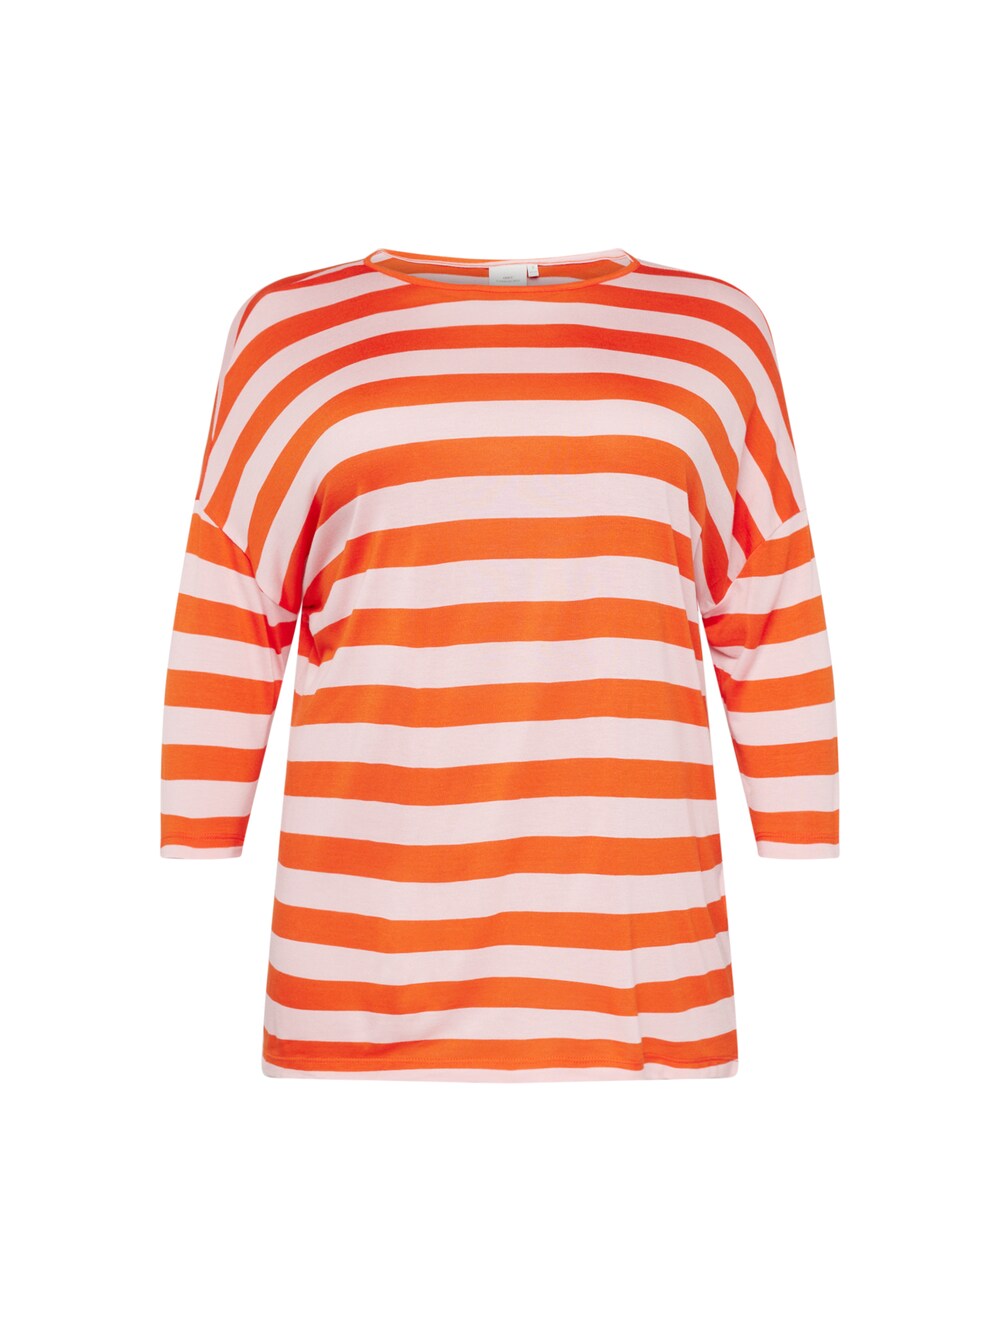 Рубашка ONLY Carmakoma LICAP, оранжево-красный рубашка only оранжево красный